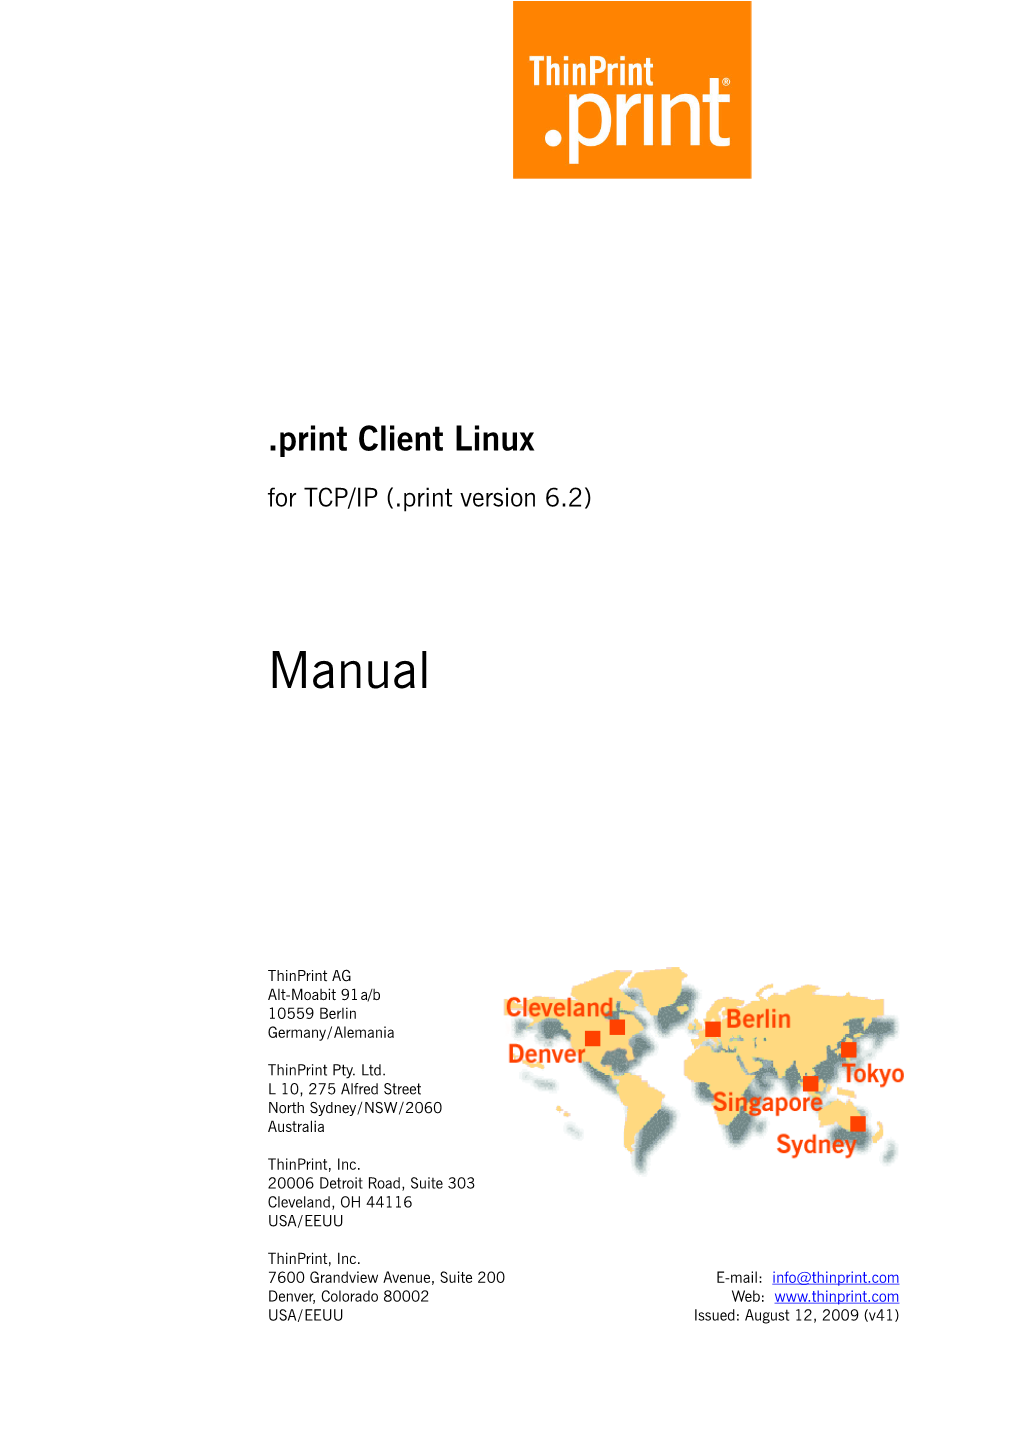 Print Client Linux for TCP/IP (.Print Version 6.2)